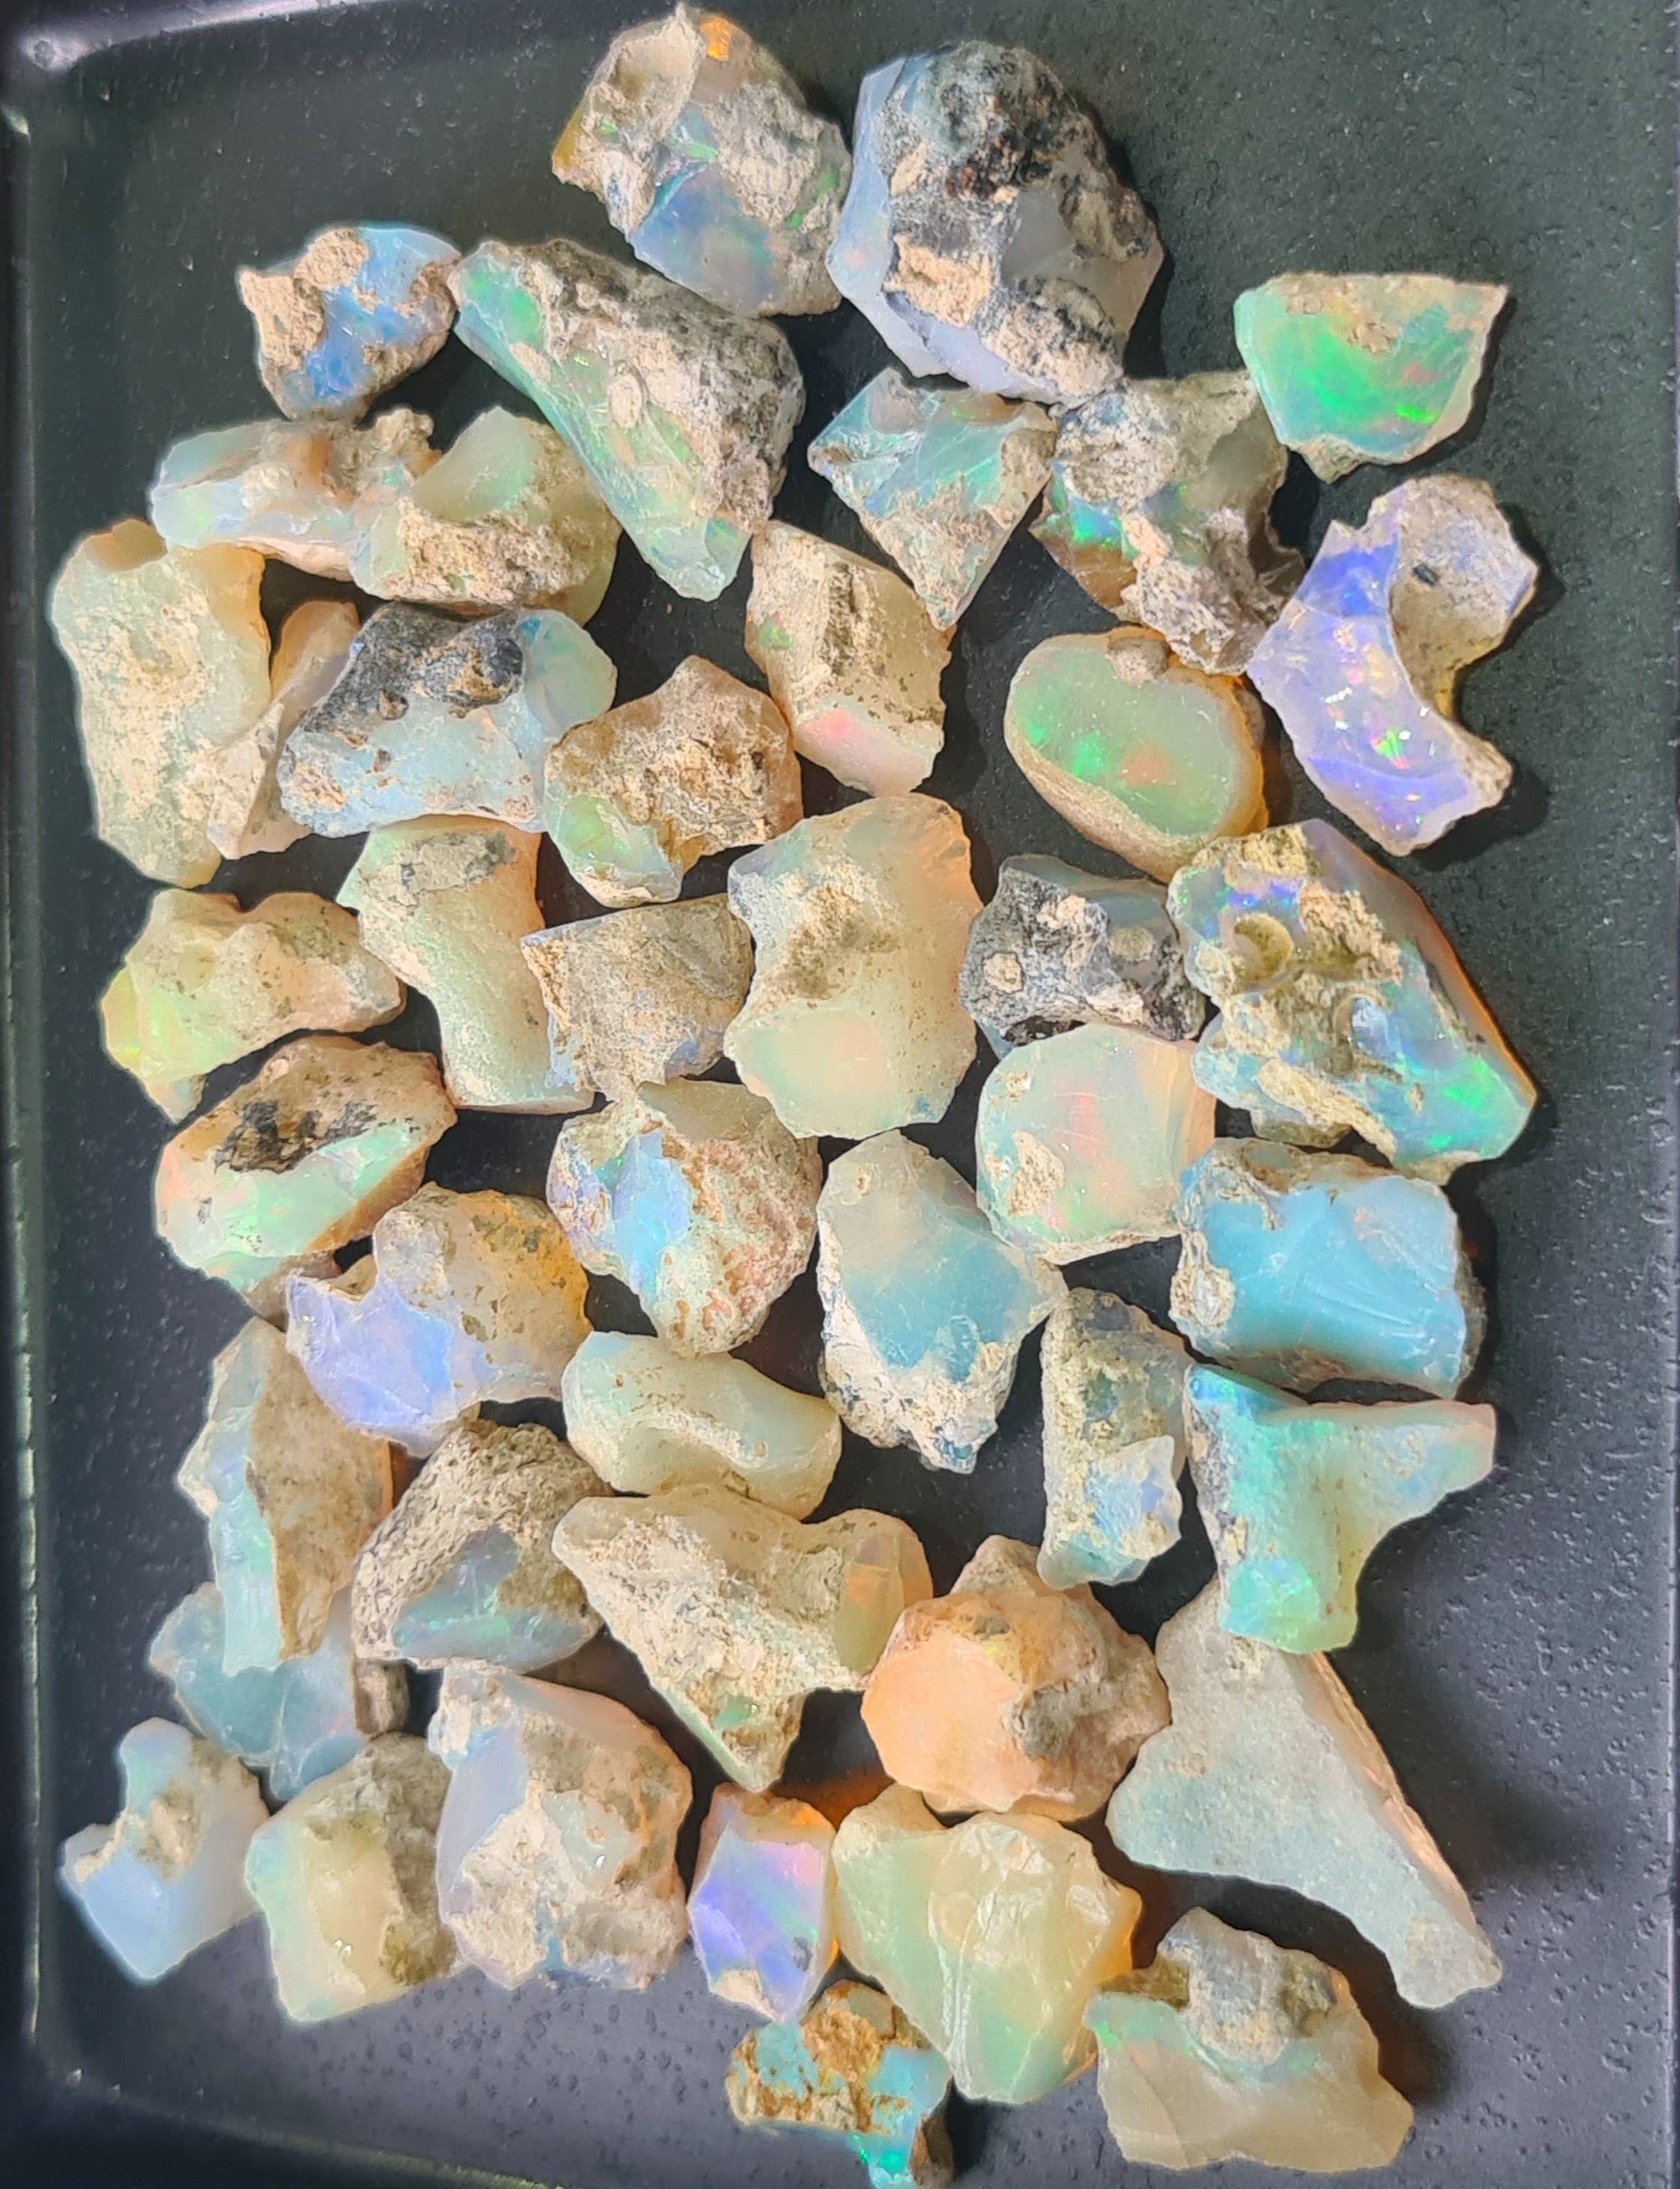 44 Pcs Natural  Ethiopian Opal Rough Gemstone Mix Shape: 9-21mm - The LabradoriteKing